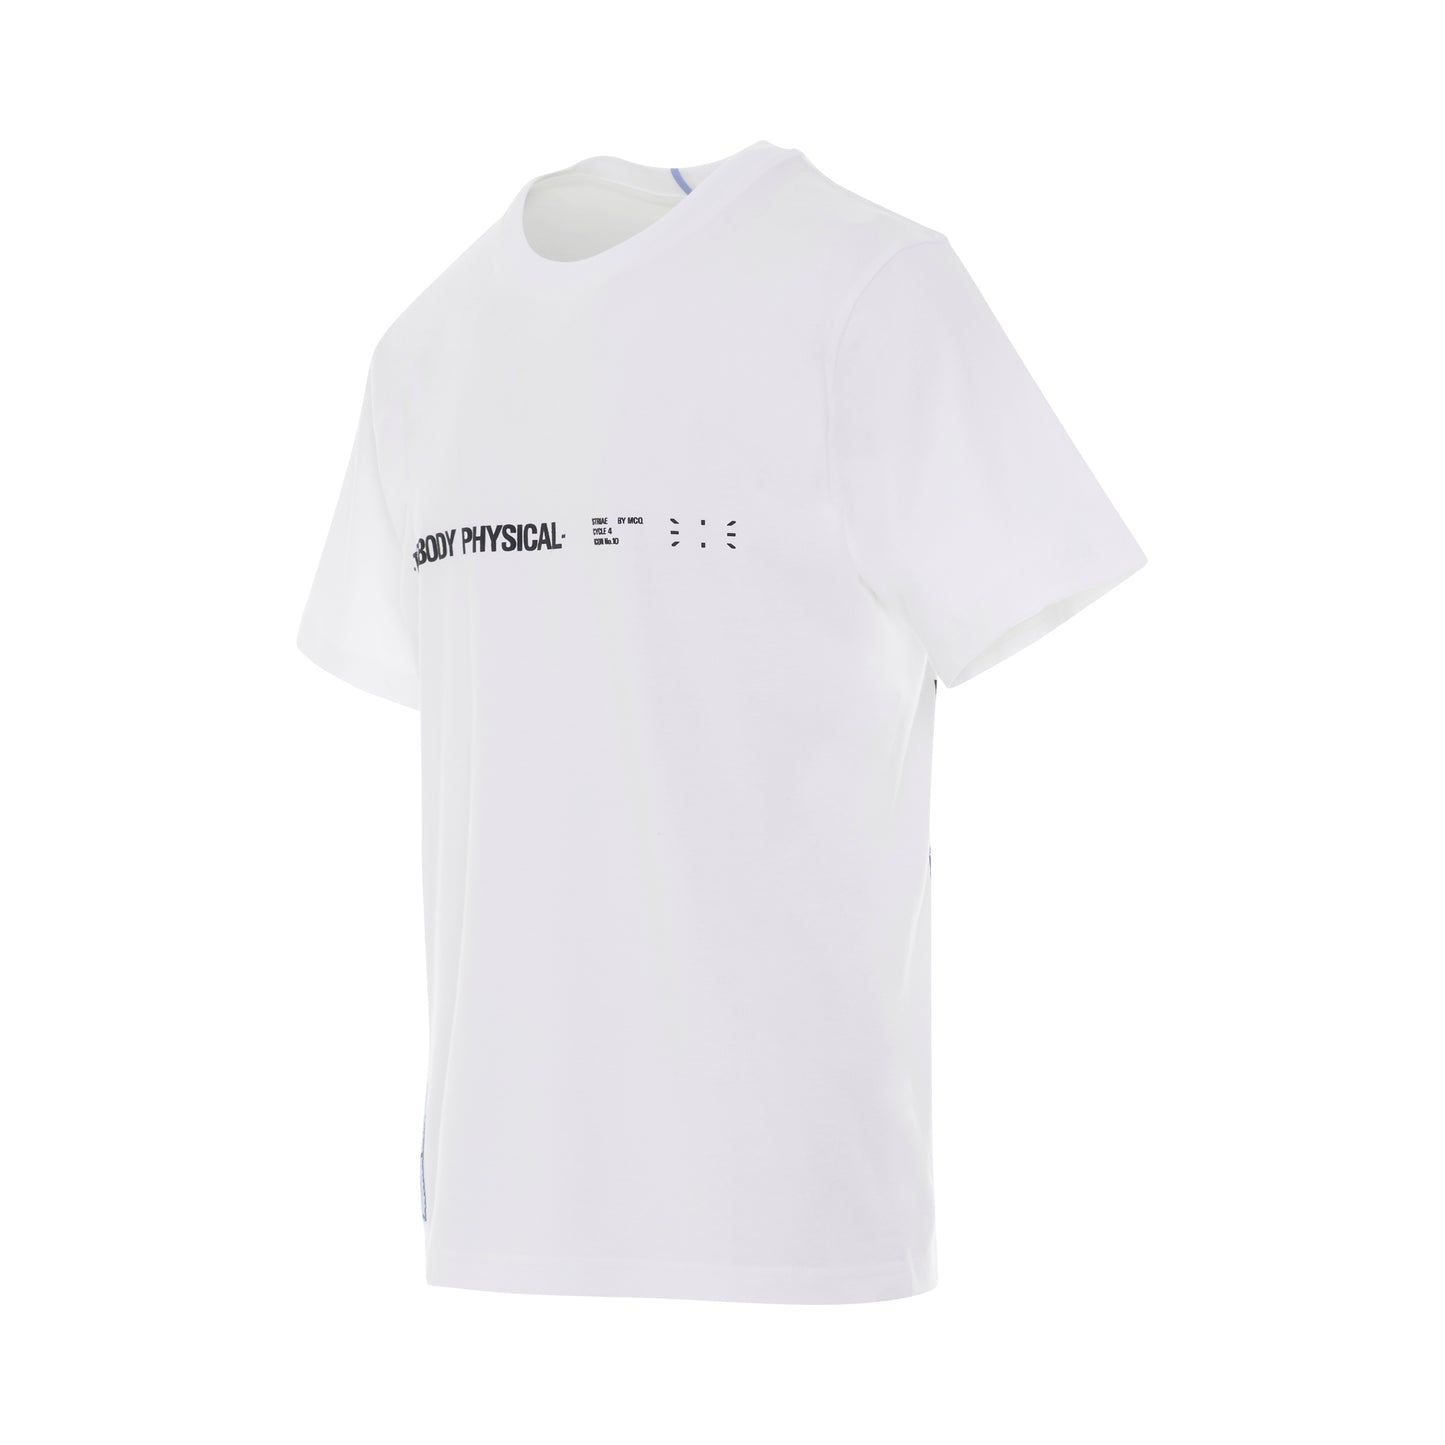 Striae Manifesto T-Shirt in White